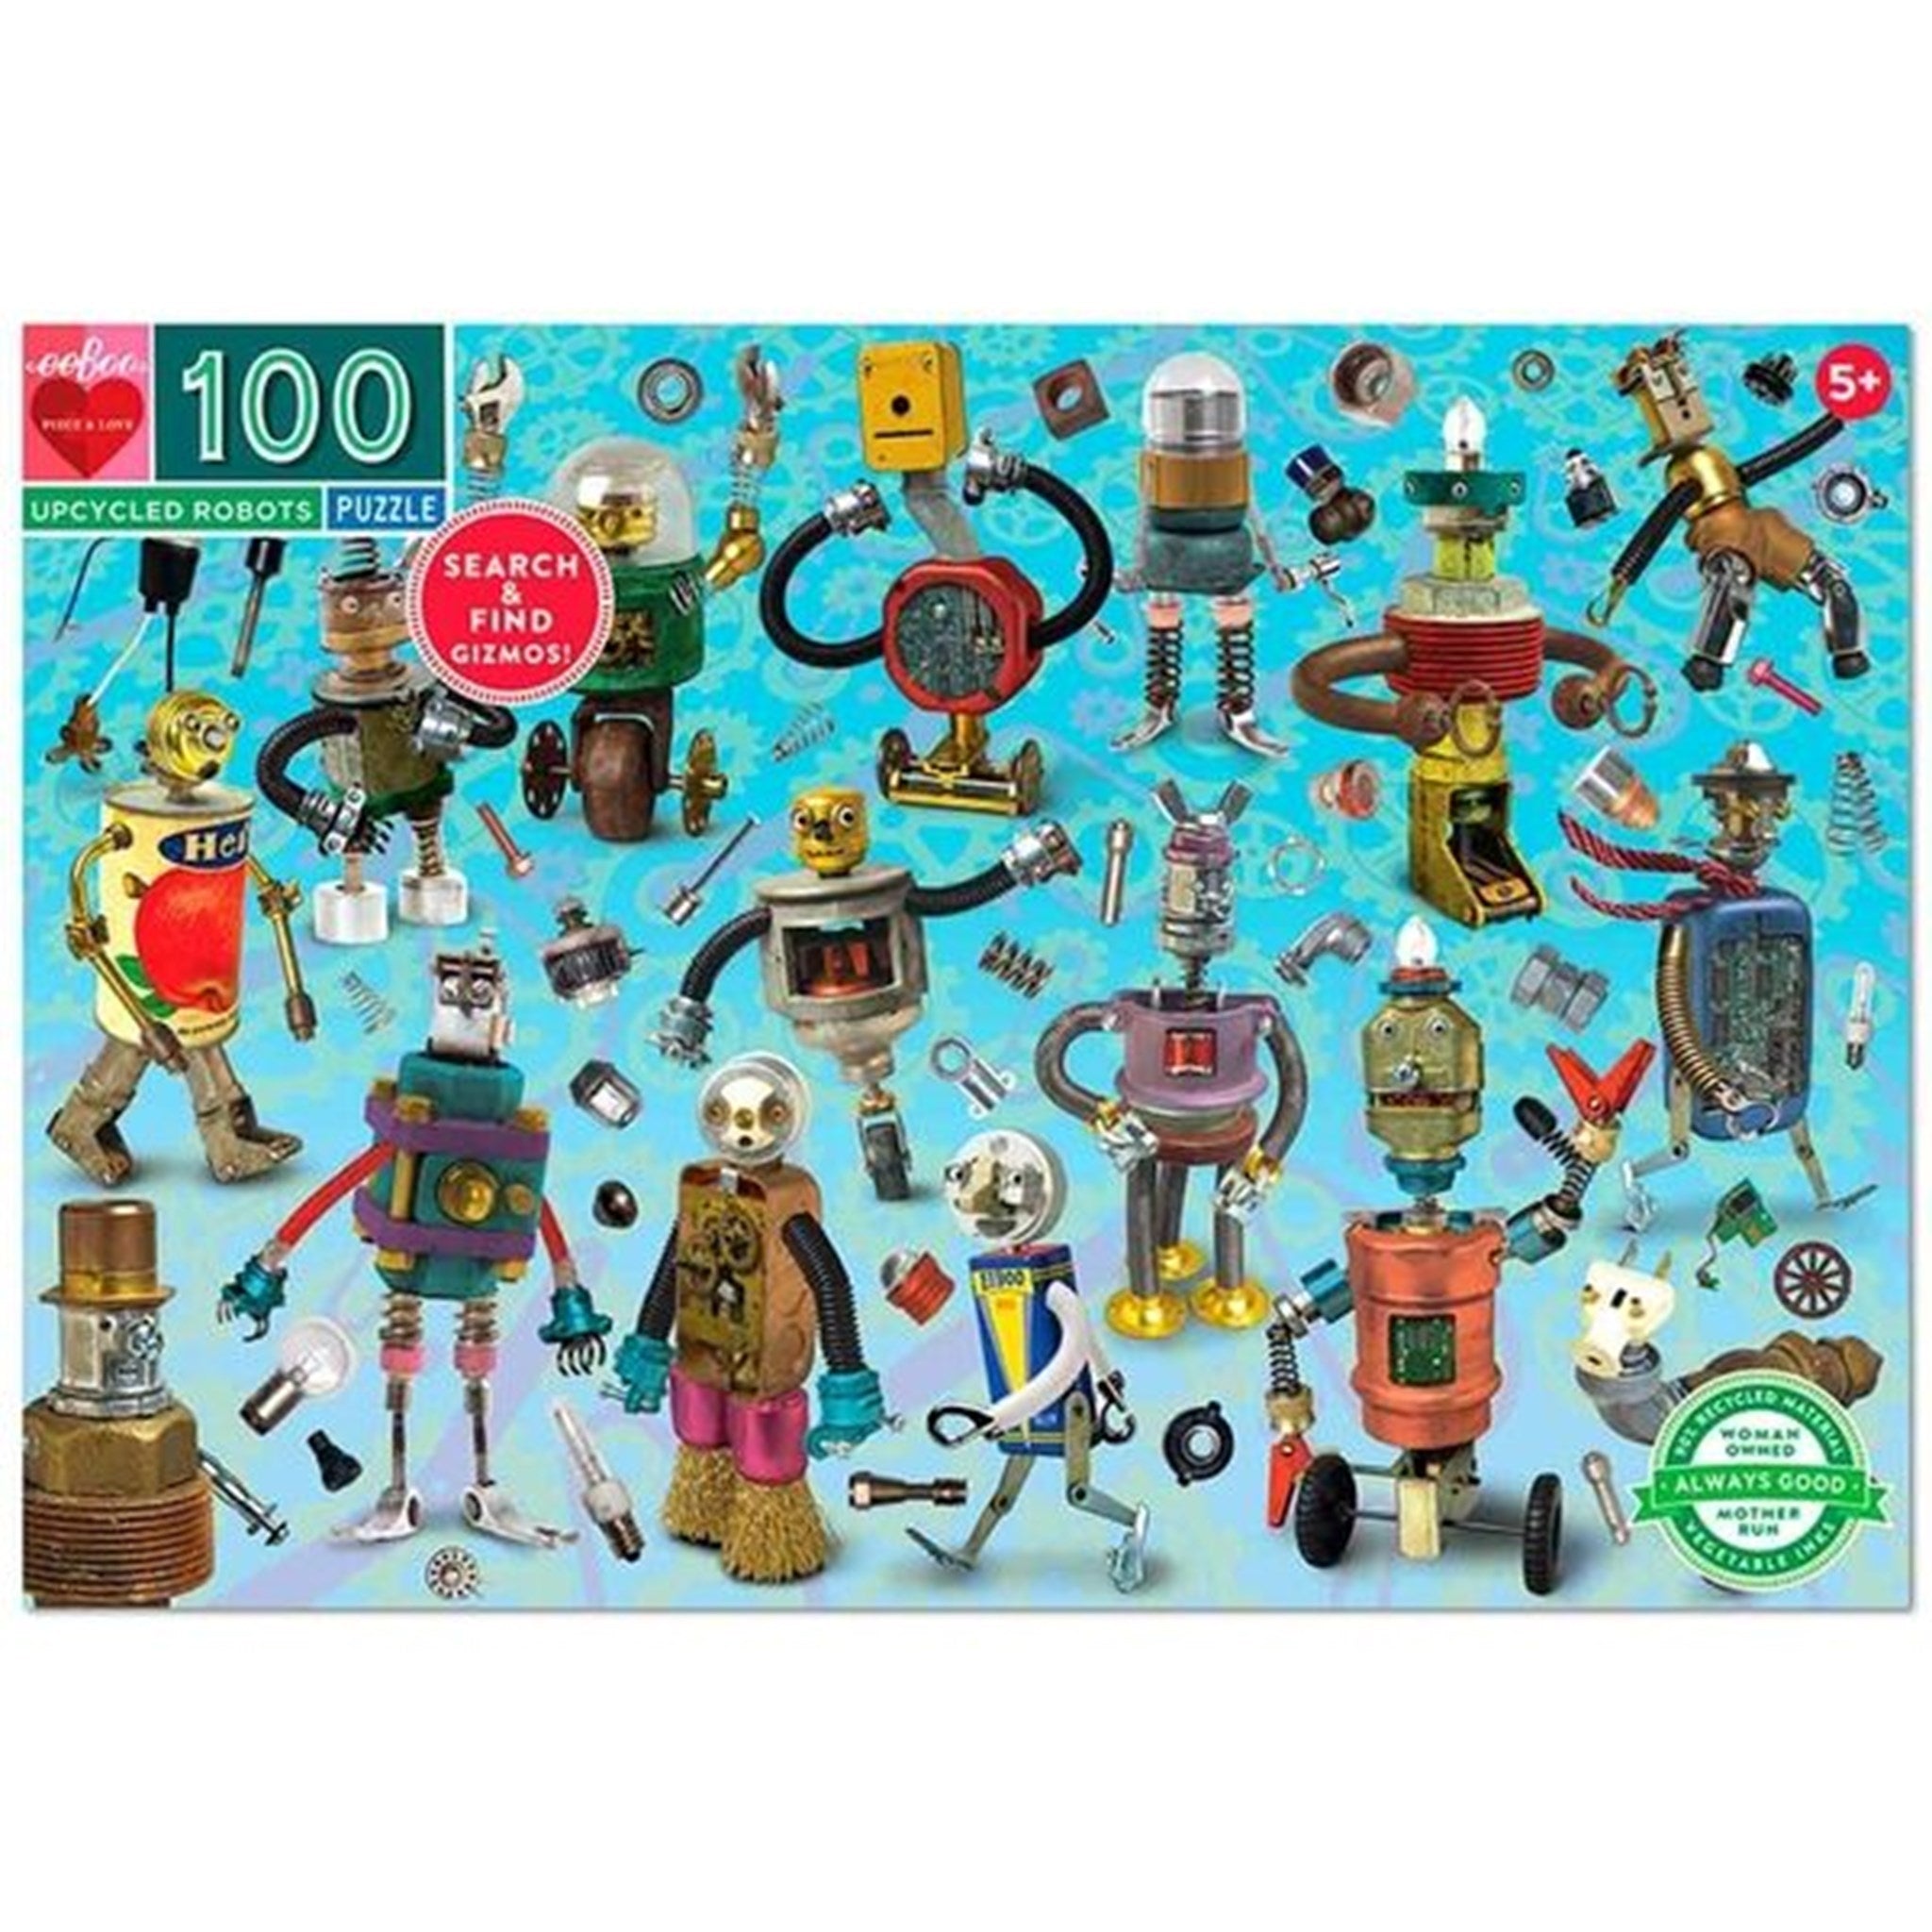 Eeboo Puzzle 100 Pieces - Upcycled Robots